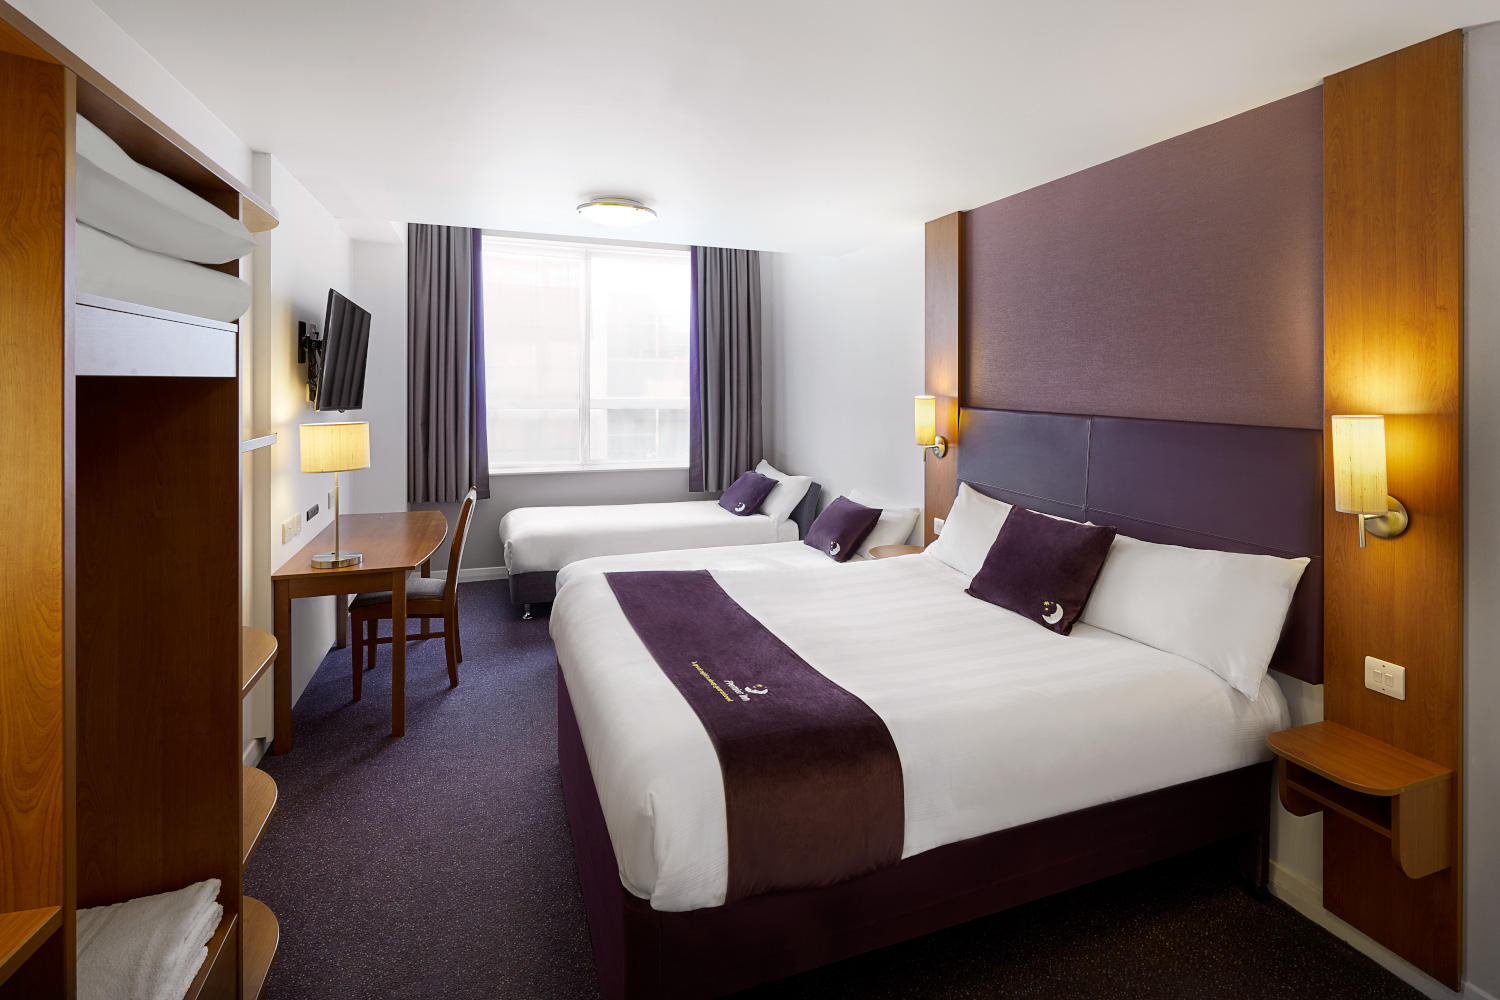 Premier Inn family room Premier Inn Aberdeen City Centre hotel Aberdeen 03337 773655